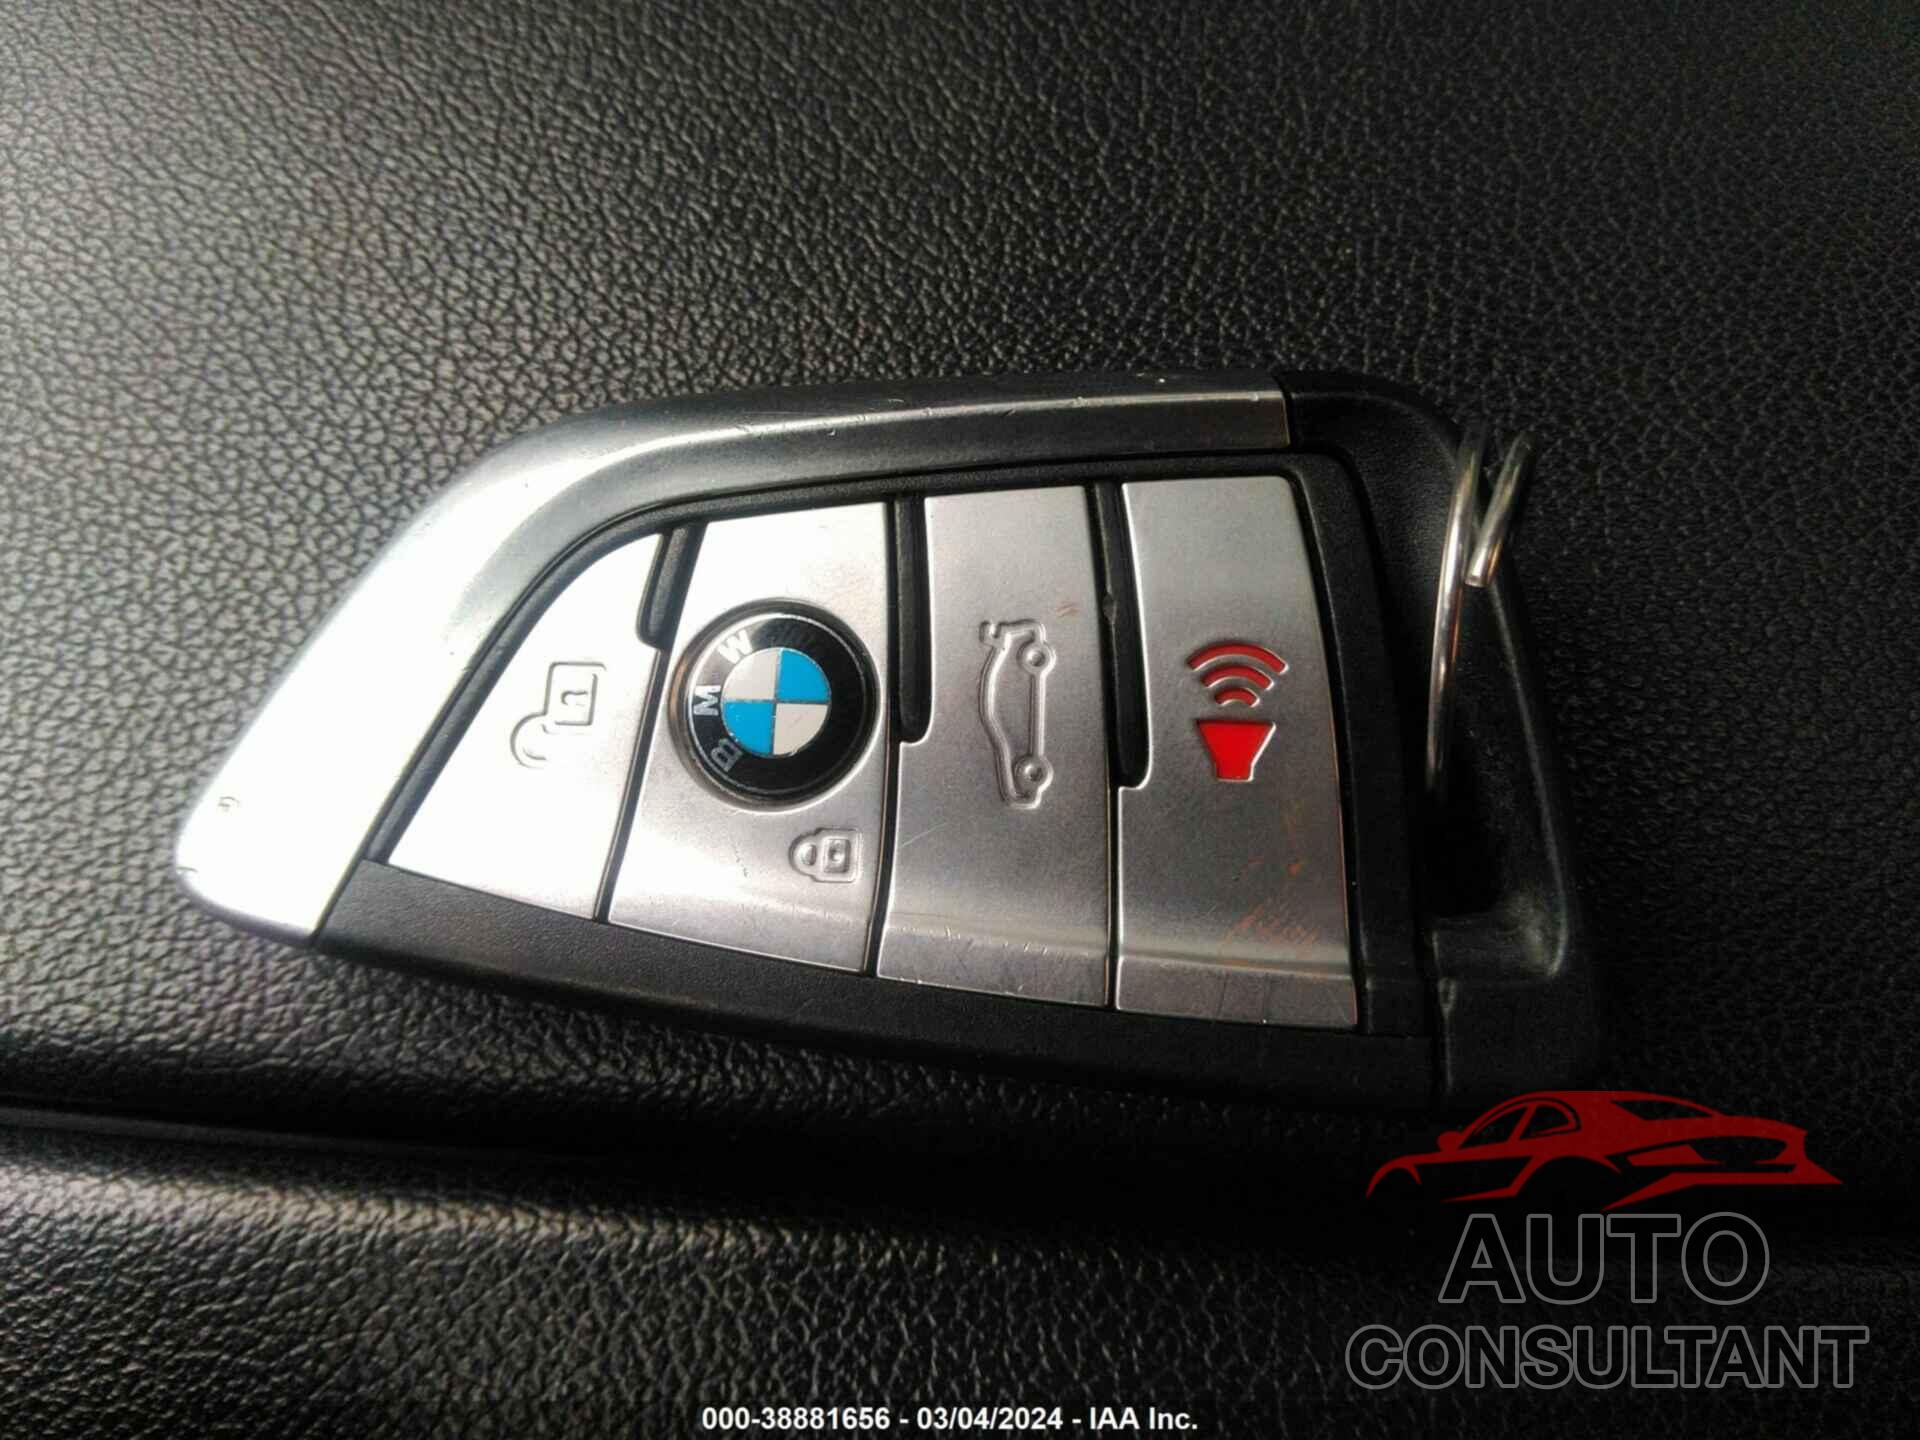 BMW 530 2022 - WBA13BJ02NWX39538